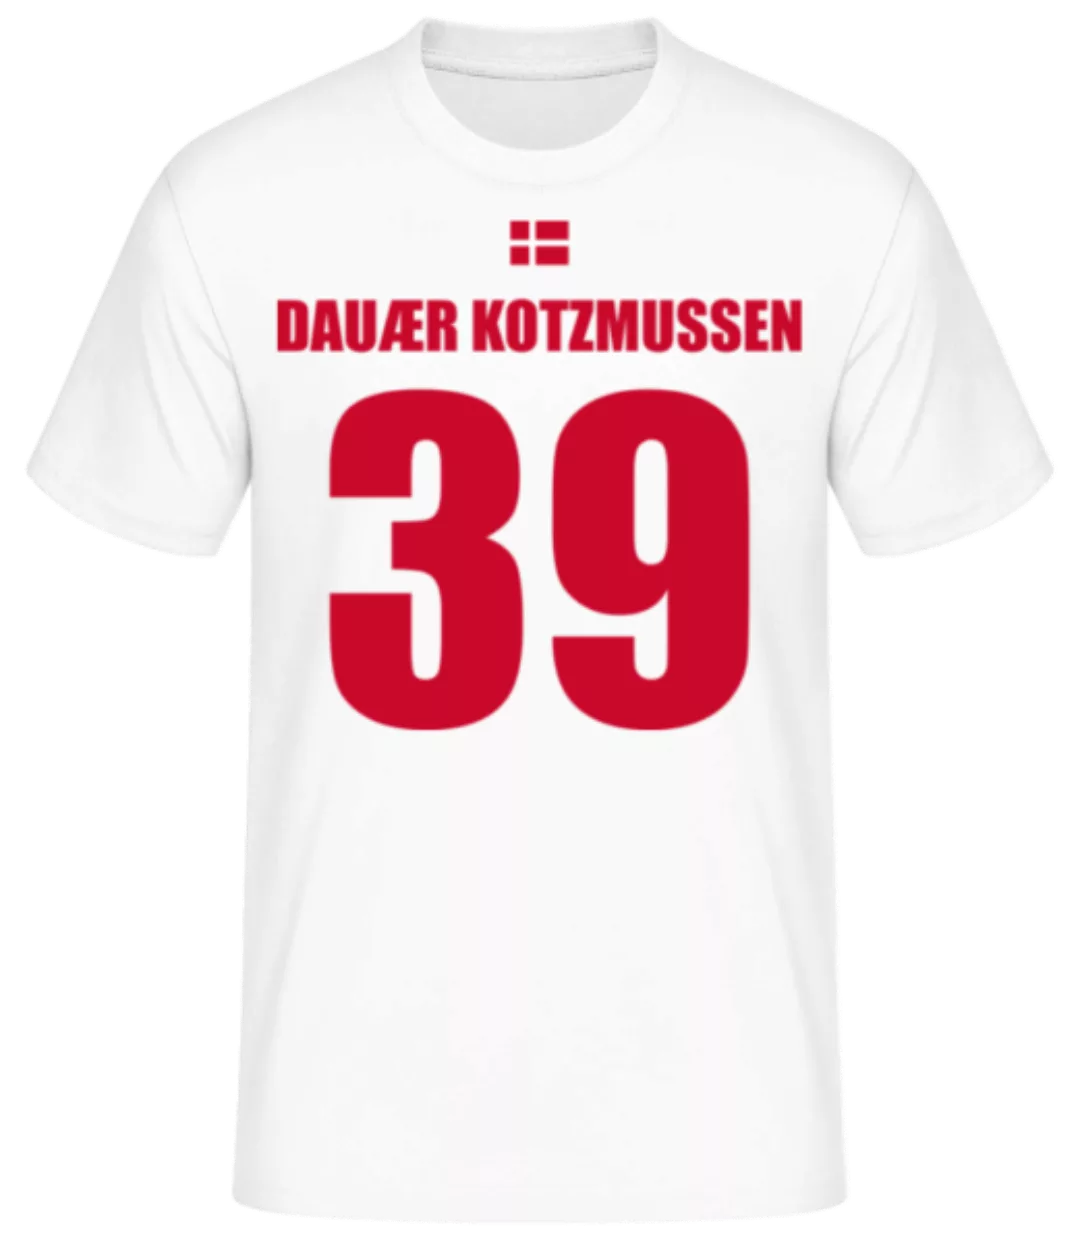 Dänemark Fußball Trikot Dauær Kotzmussen · Männer Basic T-Shirt günstig online kaufen